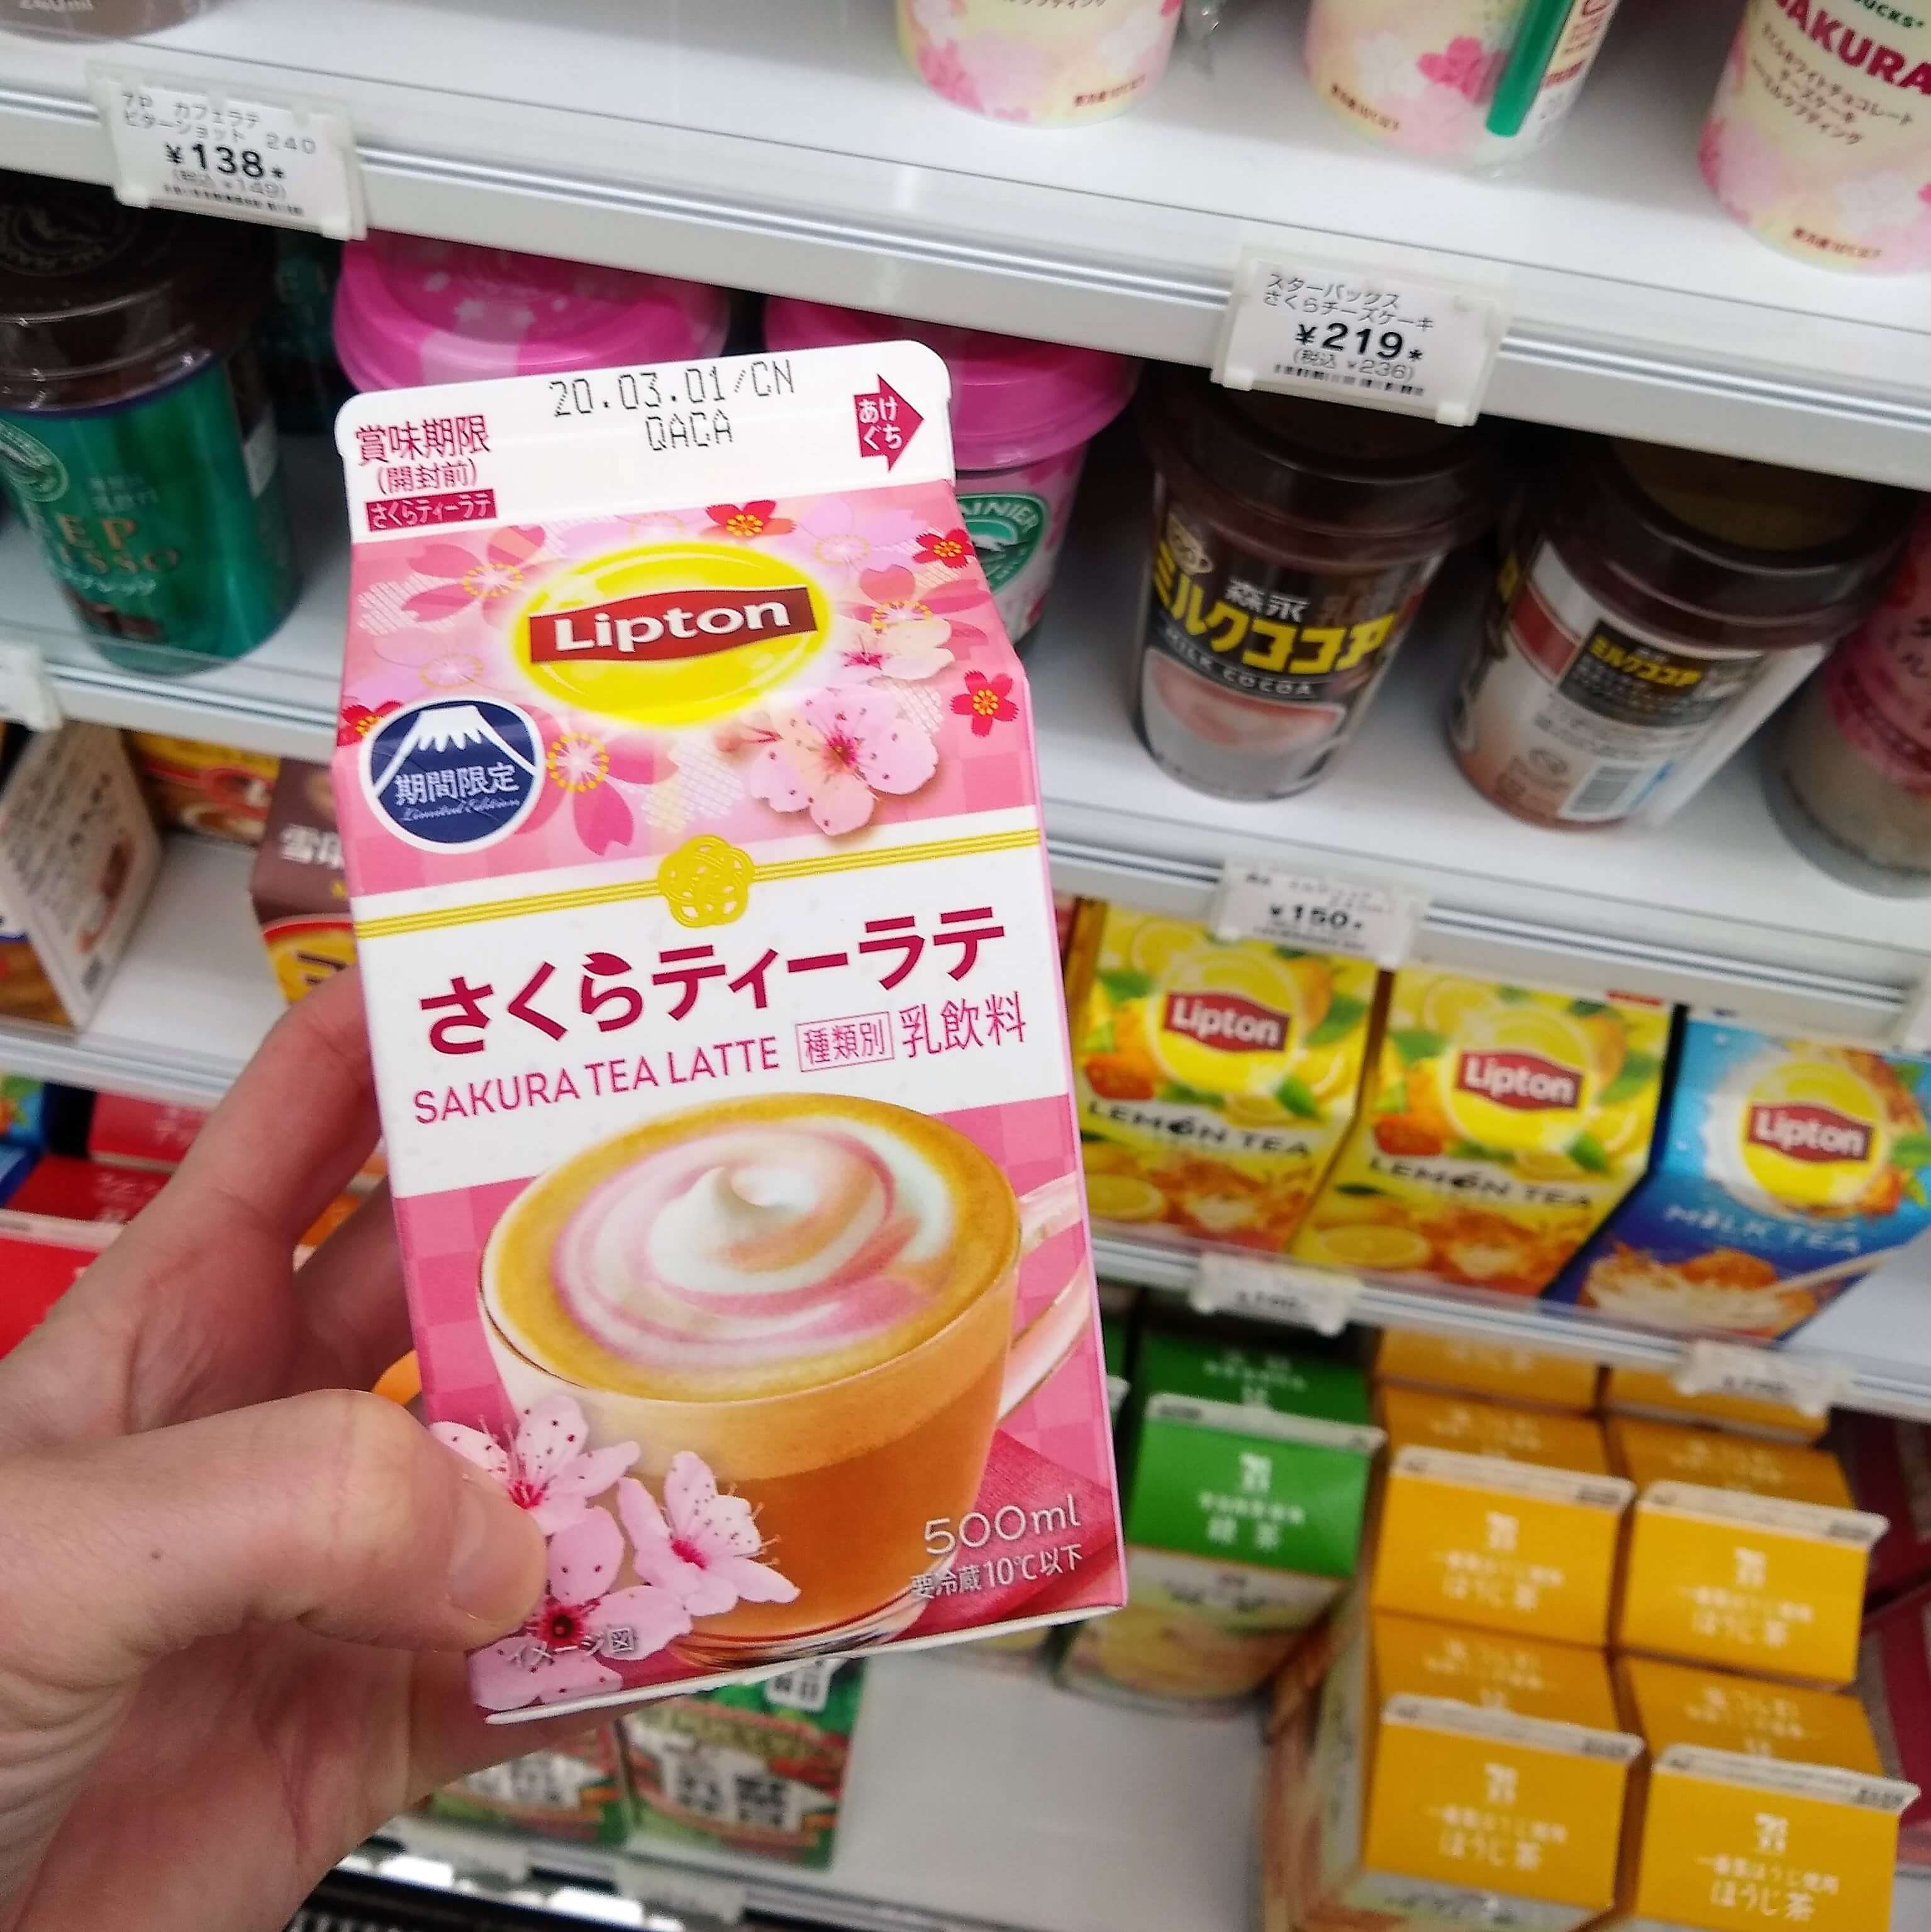 Lipton's Sakura Tea Latte